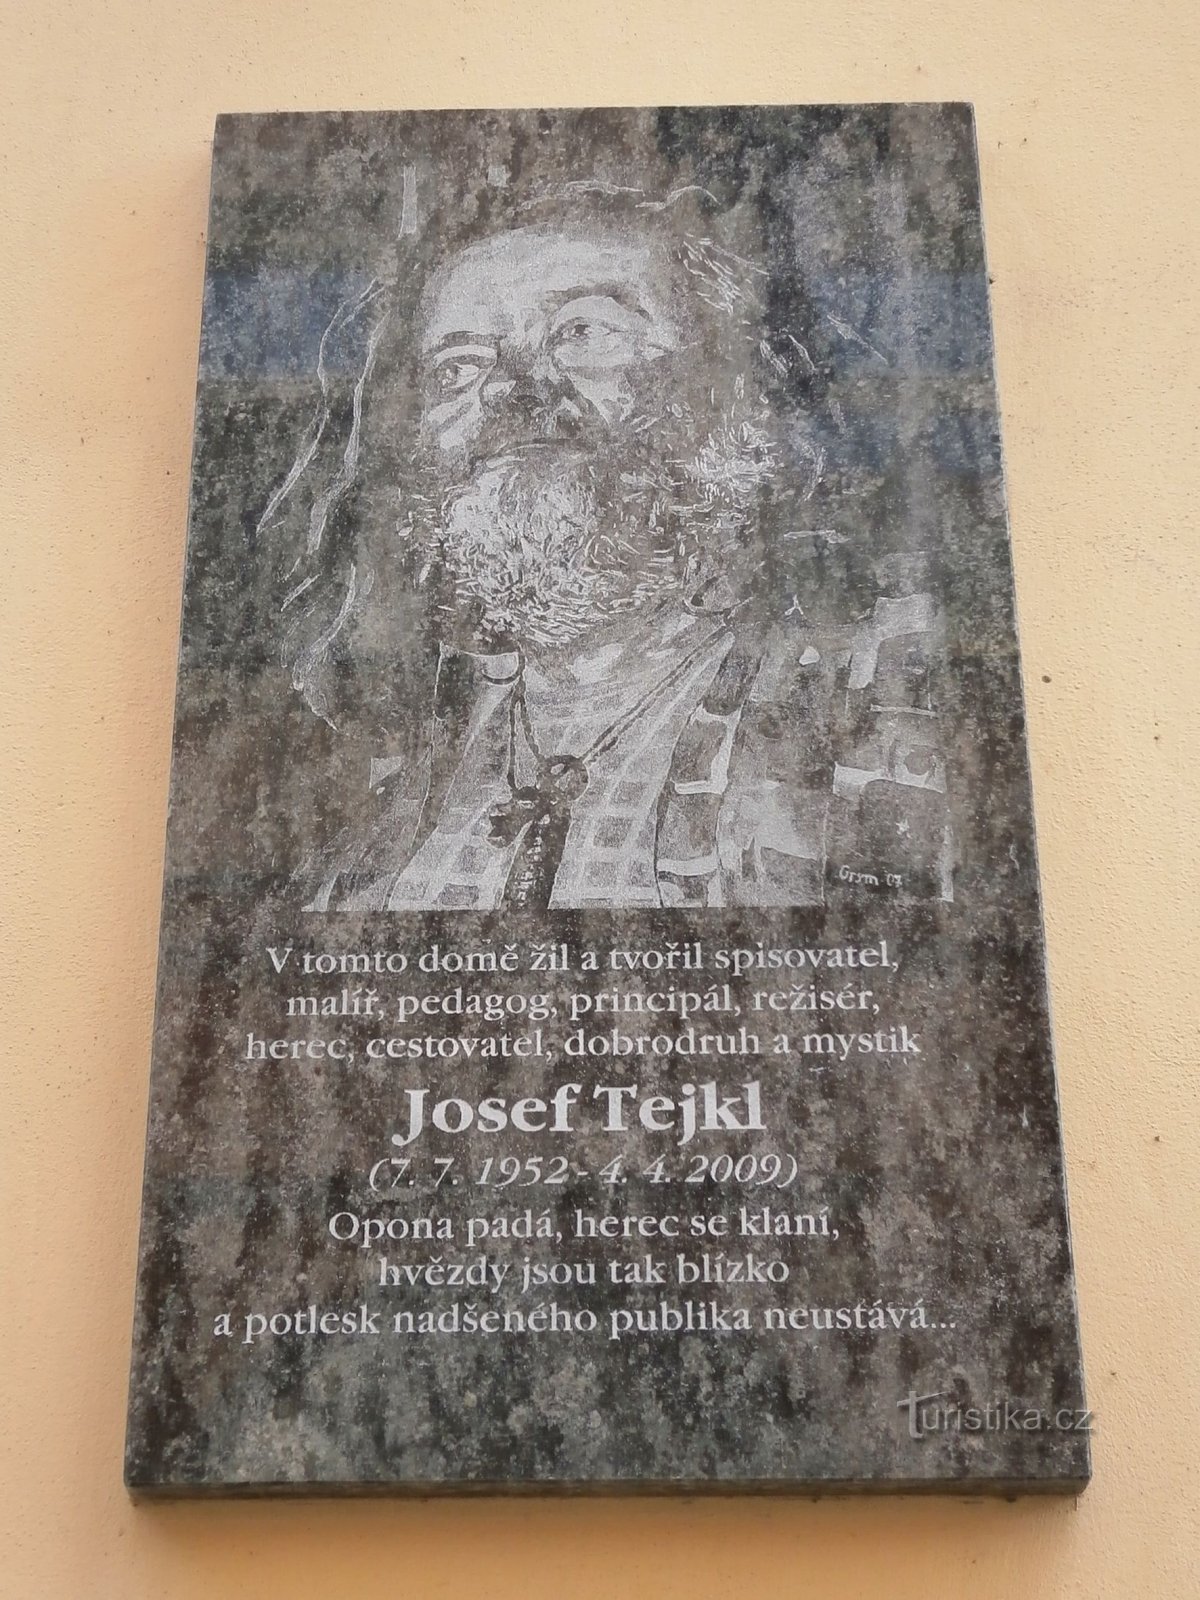 Tablica pamiątkowa Josefa Tejkla (Hradec Králové, 15.7.2013)